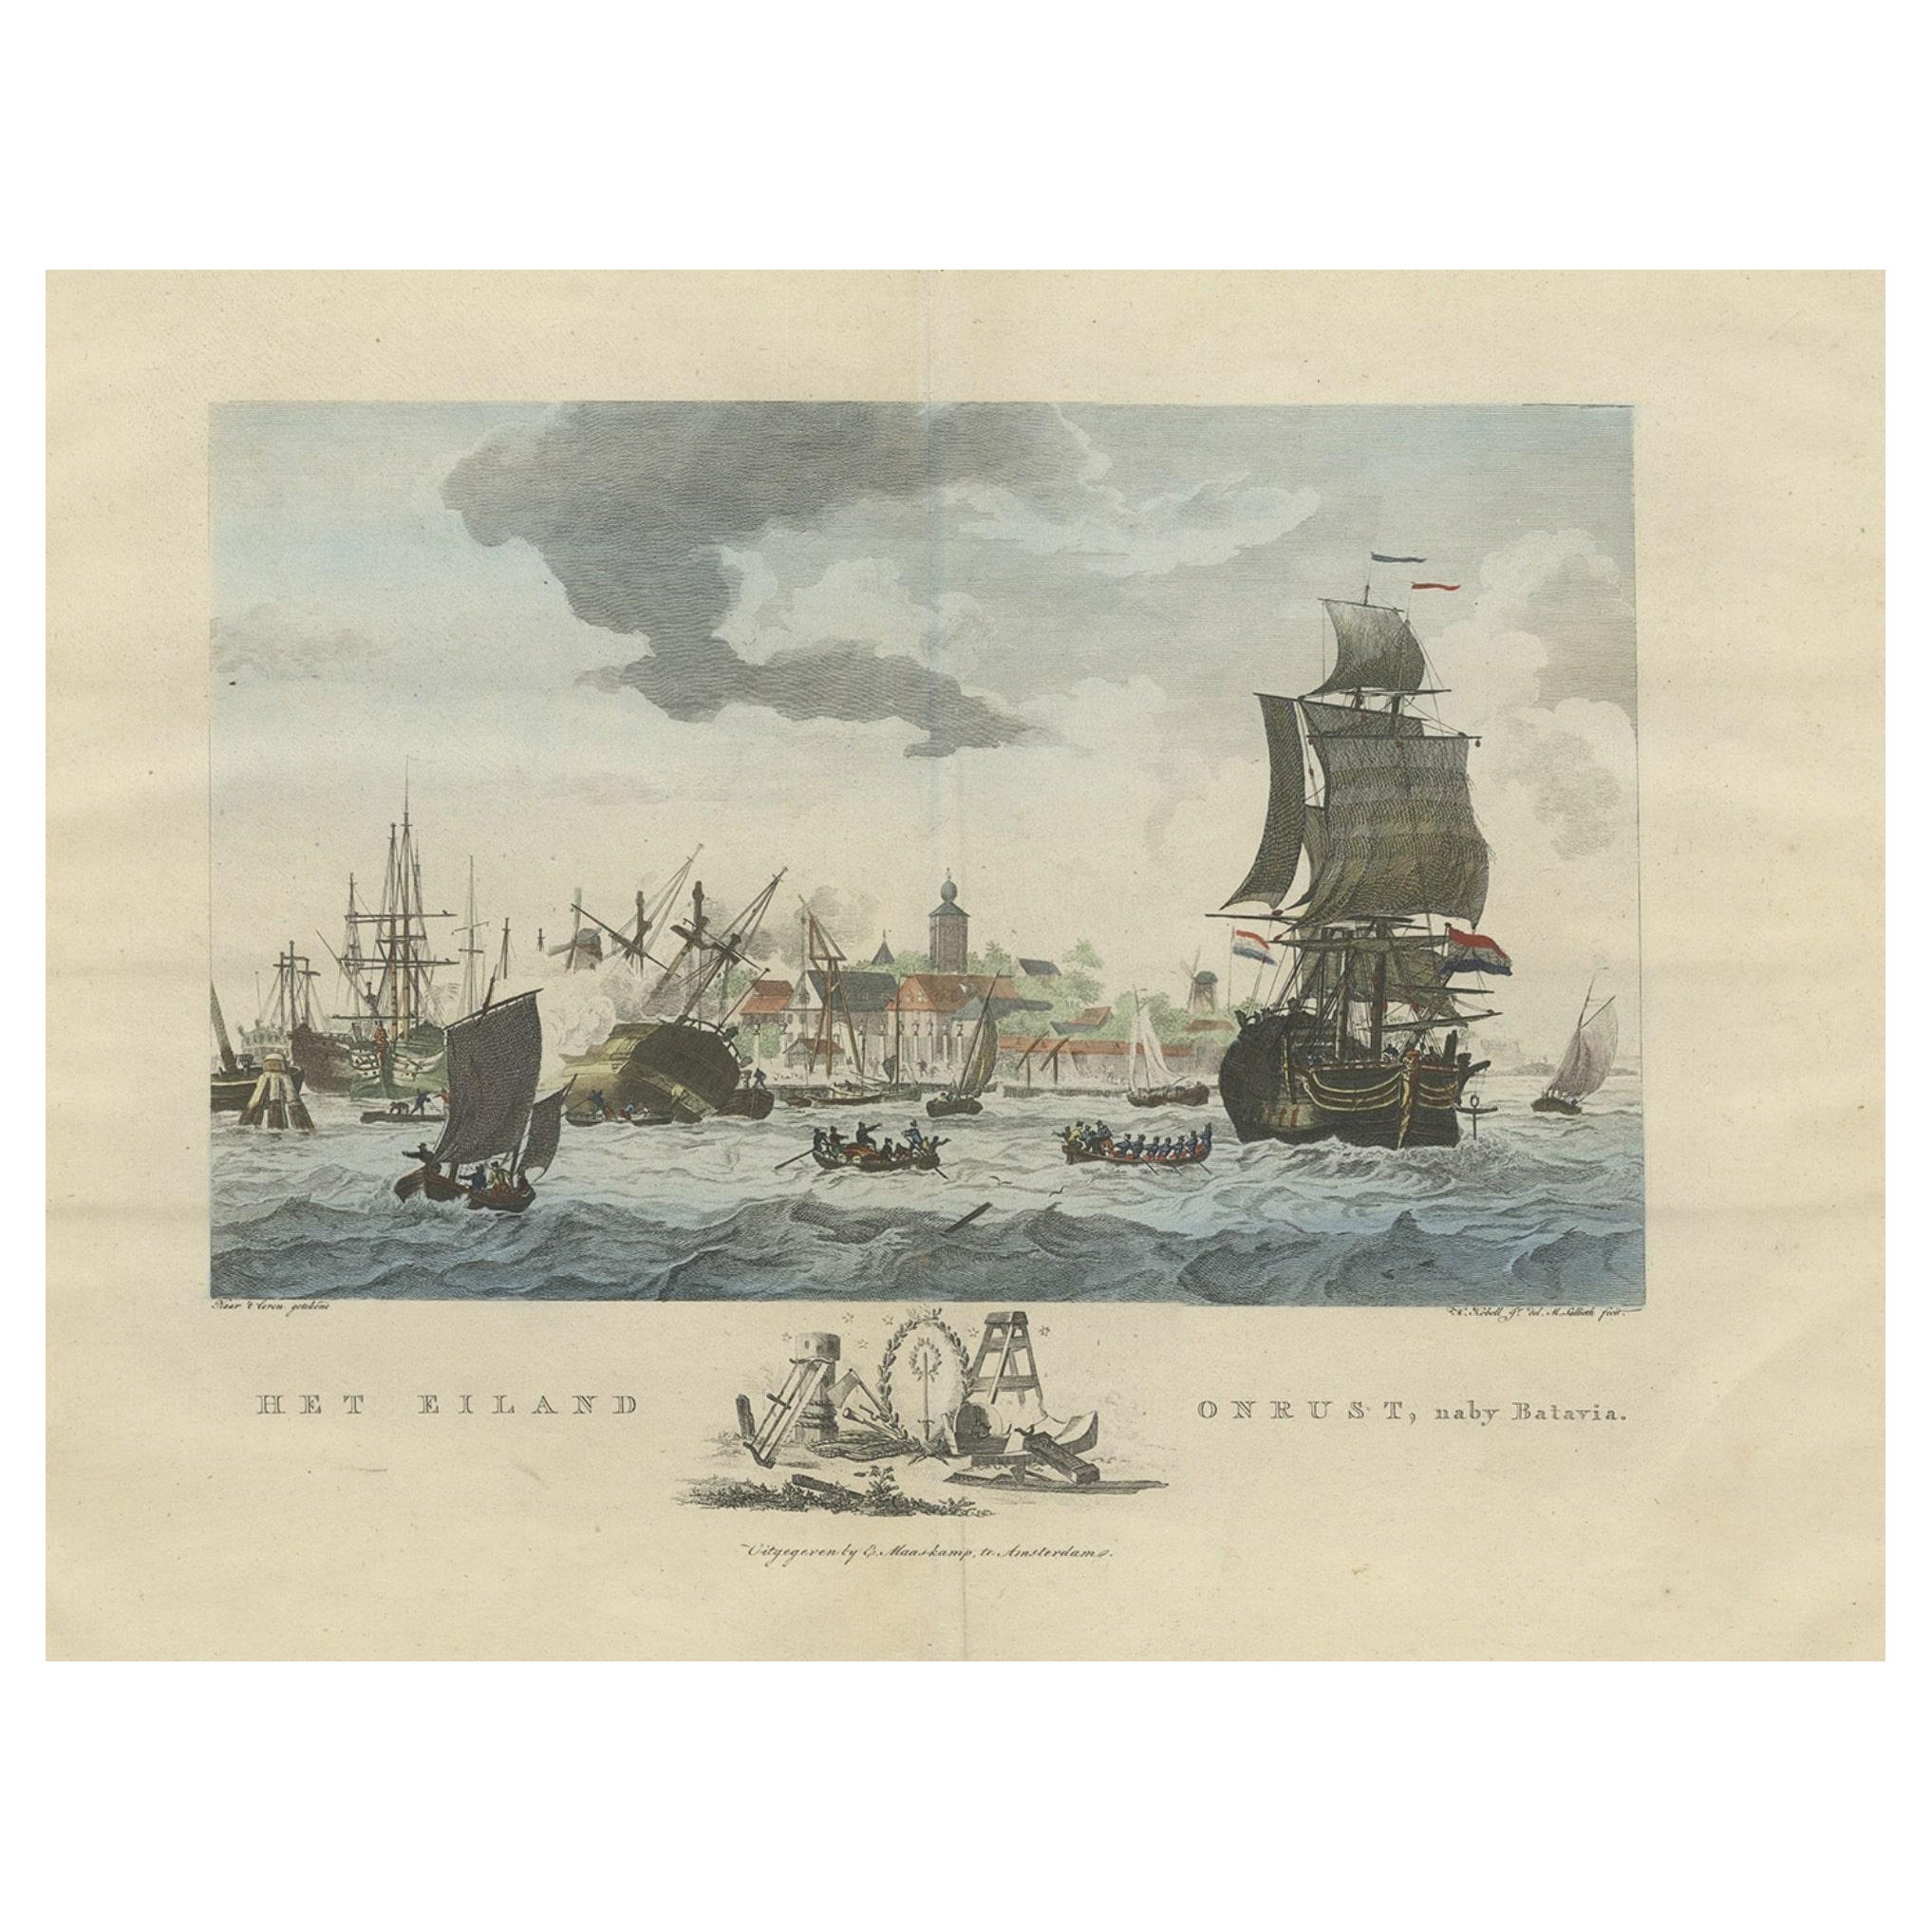 Beautiful View of Pulau 'Island' Onrust, Batavia 'Jakarta, Indonesia', ca.1805